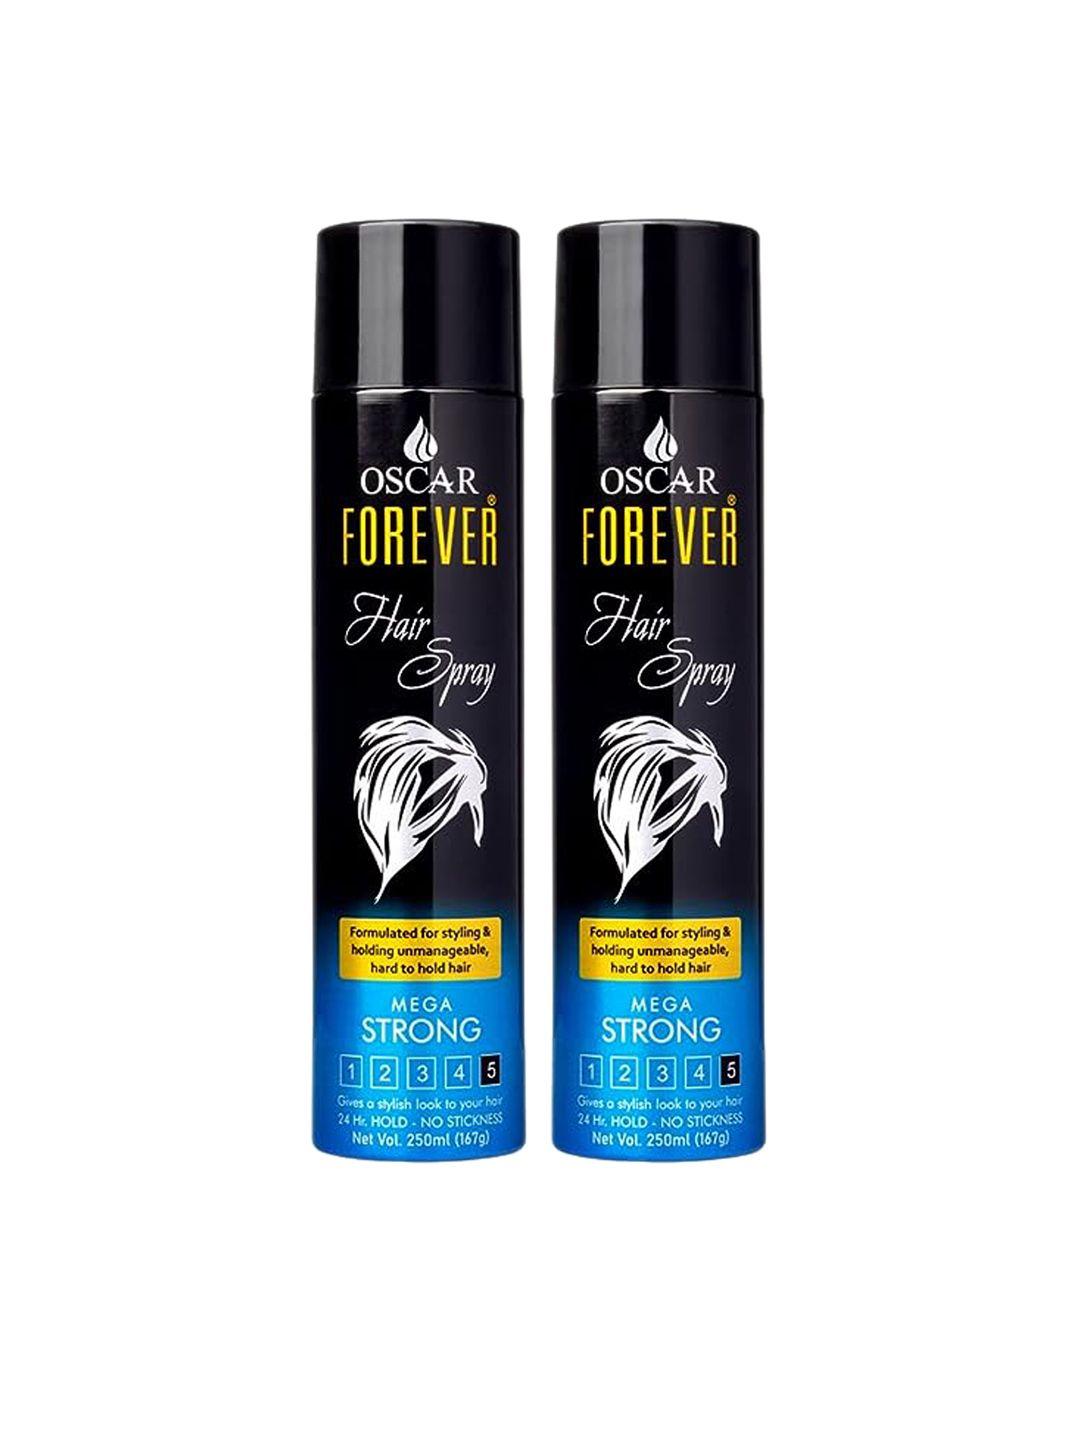 oscar set of 2 forever mega strong hair spray for hair styling - 250 ml each